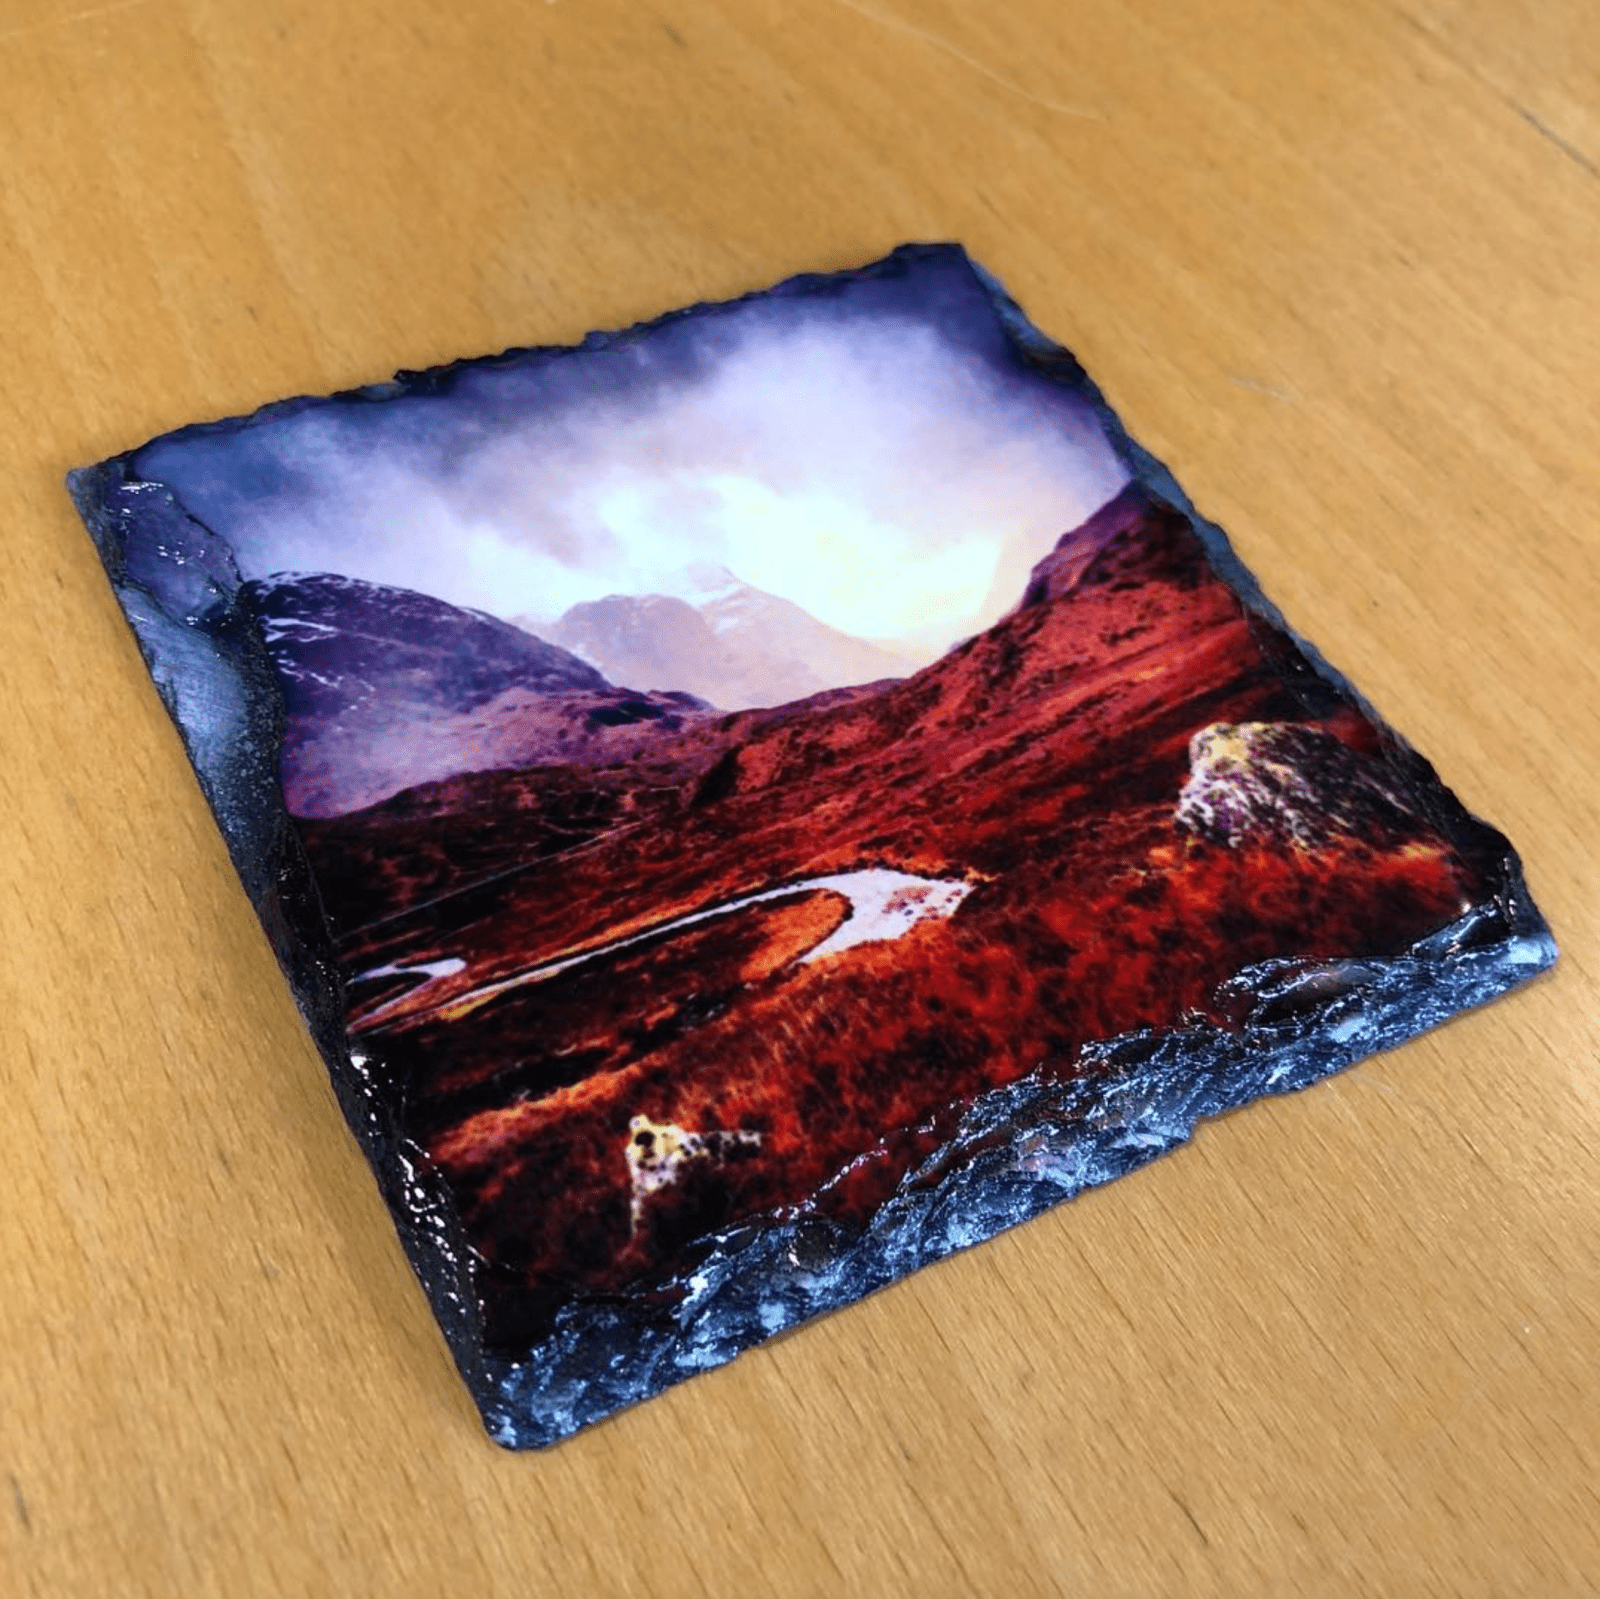 The Storr Skye Slate Art-Slate Art-Skye Art Gallery-Paintings, Prints, Homeware, Art Gifts From Scotland By Scottish Artist Kevin Hunter